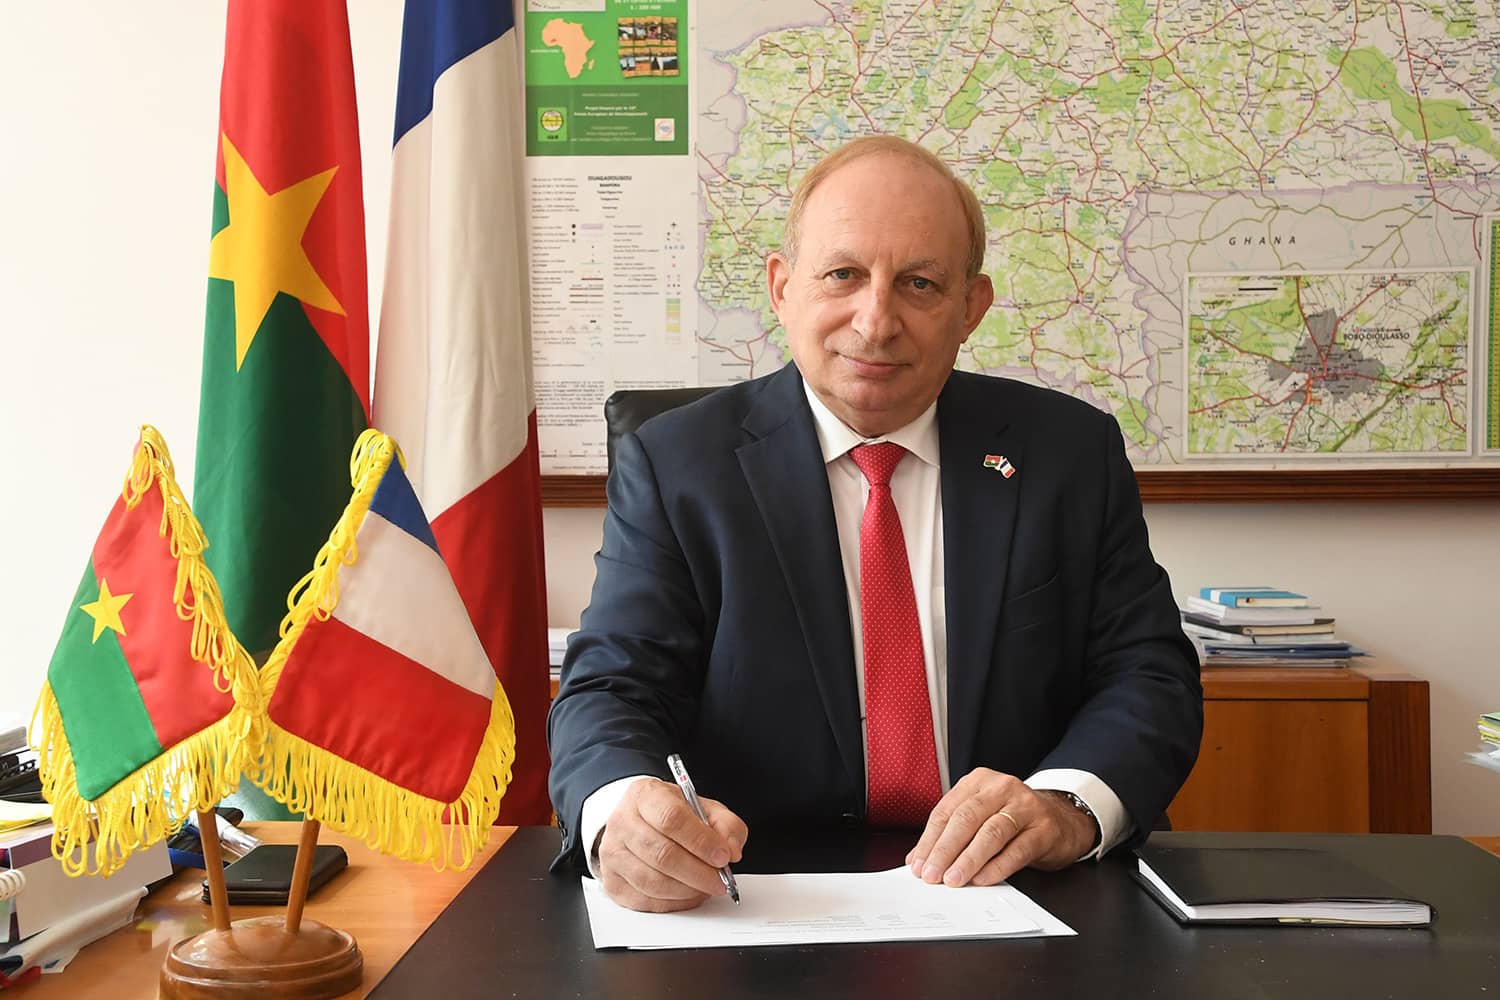 France recalls ambassador to Burkina Faso after Ouagadougou ordered pullout of troops